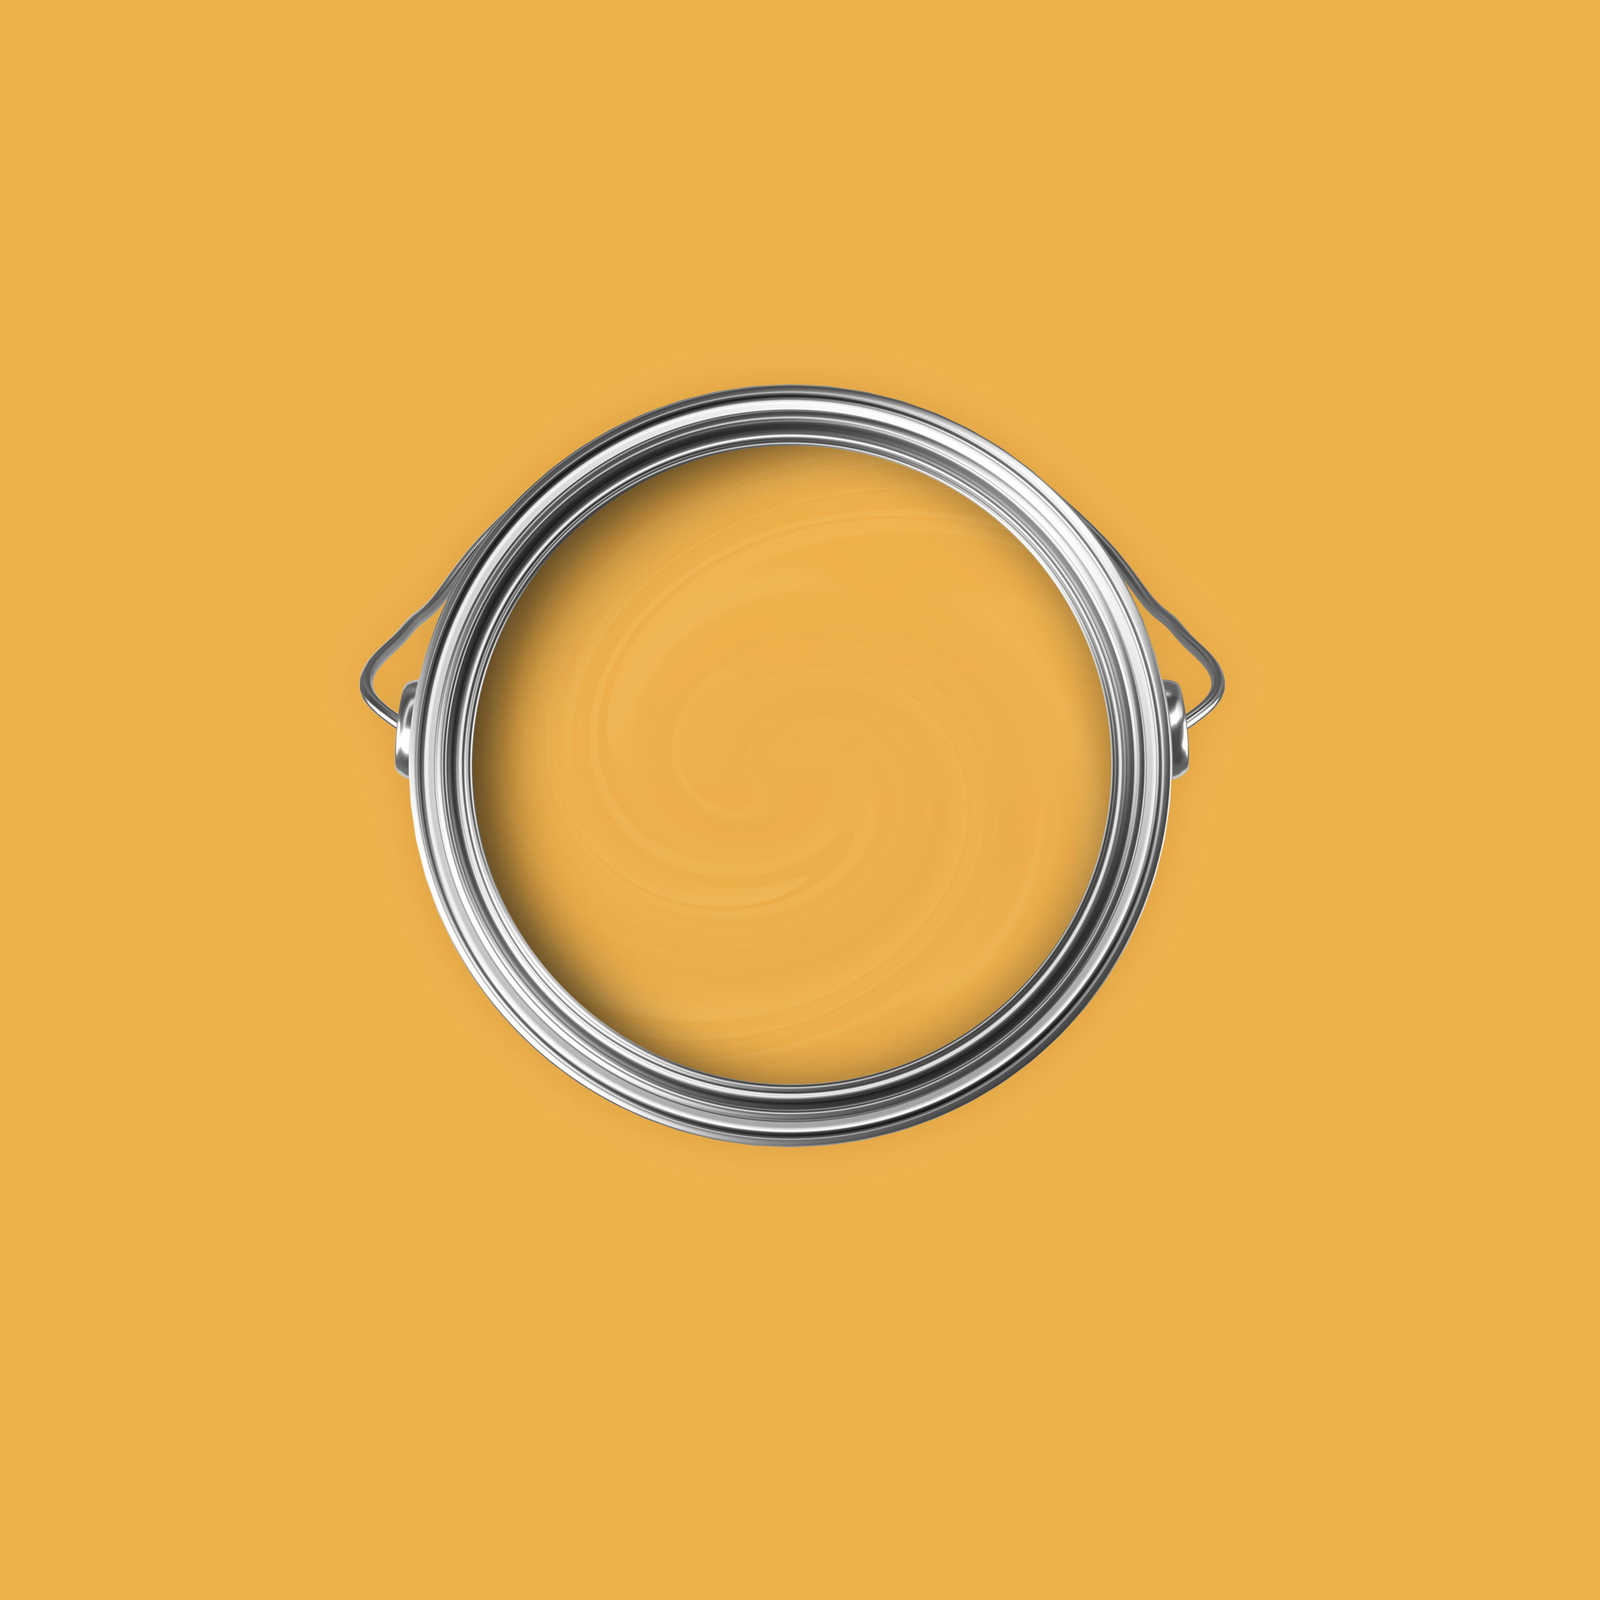             Premium Wandfarbe kräftiges Safrangelb »Juicy Yellow« NW806 – 2,5 Liter
        